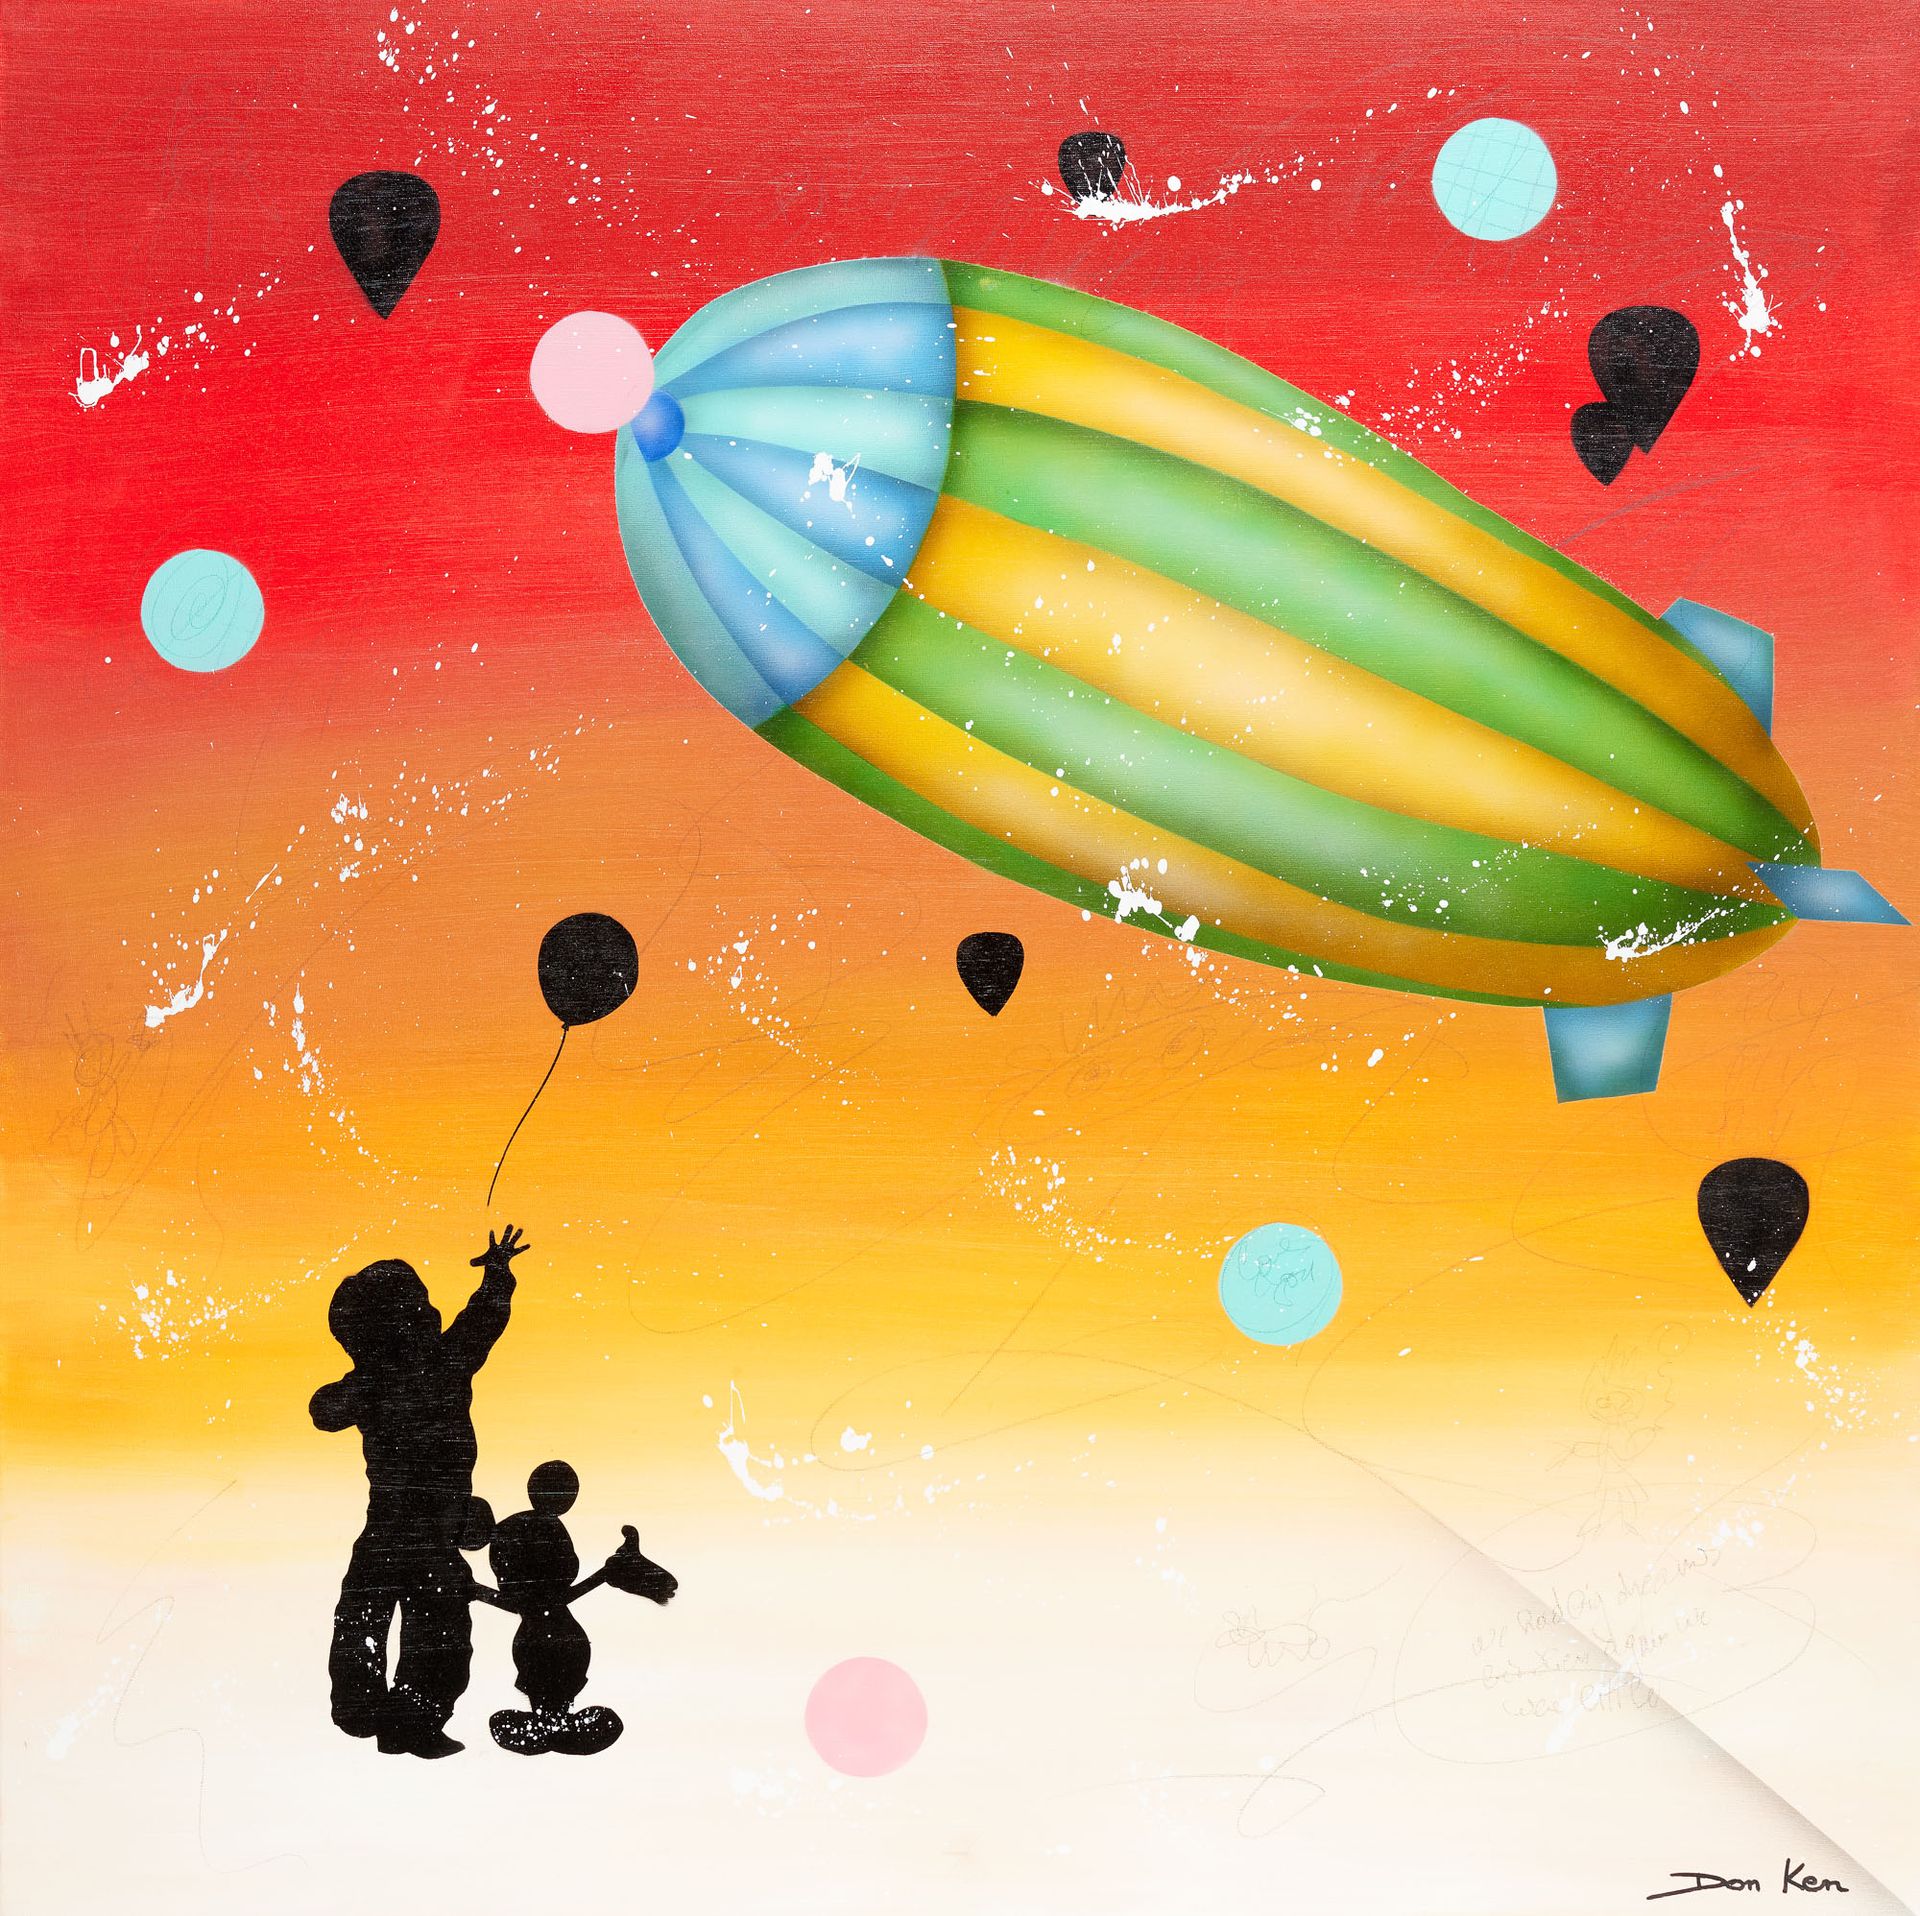 Don KEN École belge (1956) Acrilico su tela: "Big baloon".

Titolato e firmato: &hellip;